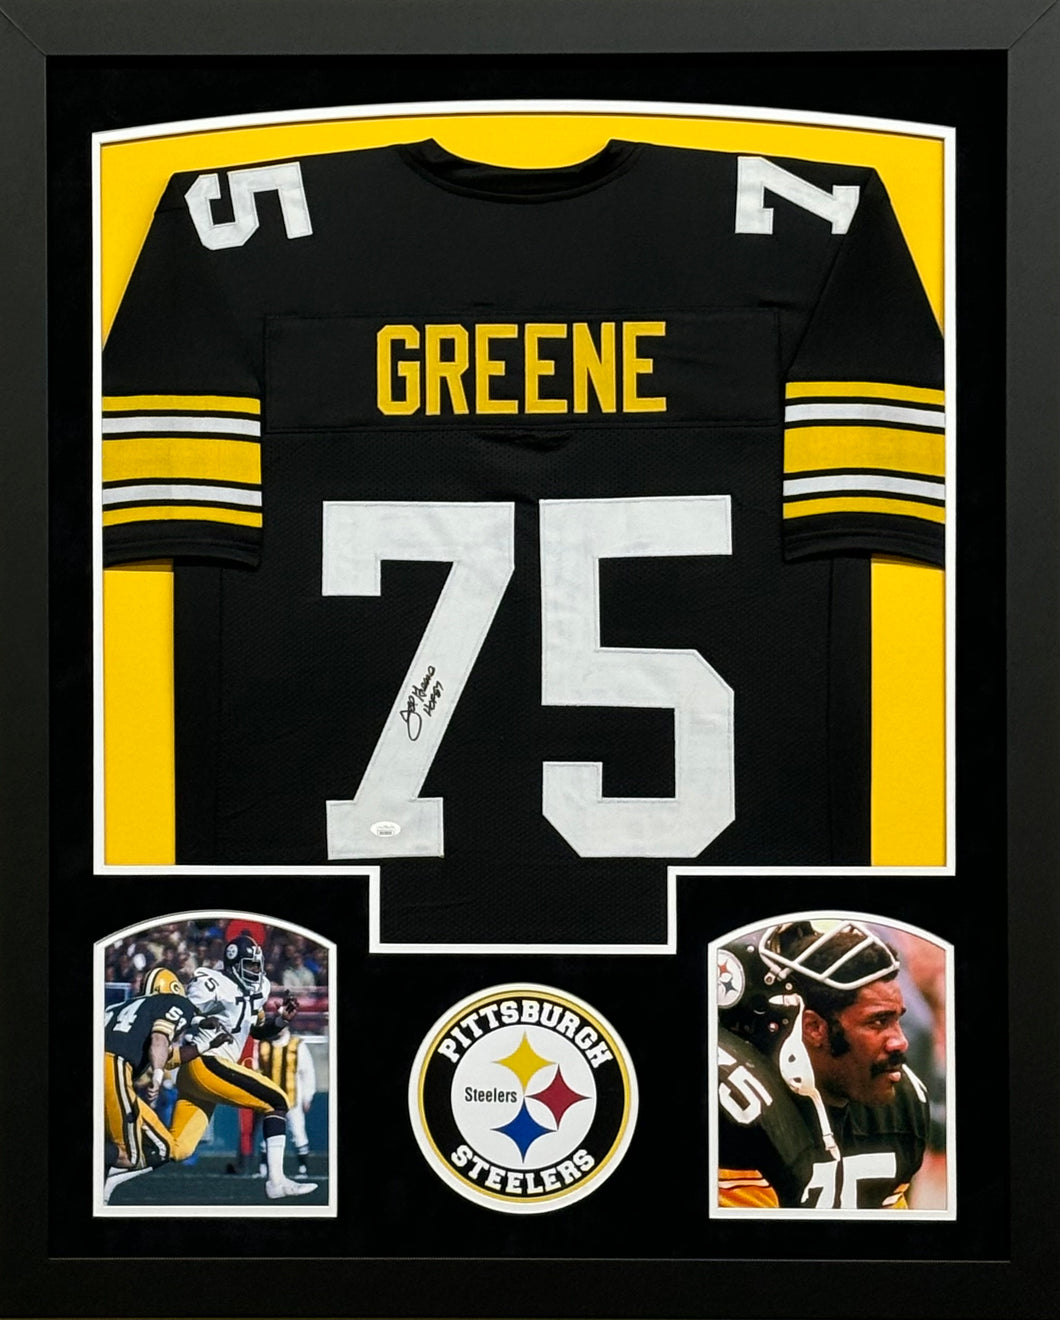 Pittsburgh Steelers Joe Greene Signed Black Jersey with HOF 87 Inscription Framed & Suede Matted with JSA COA